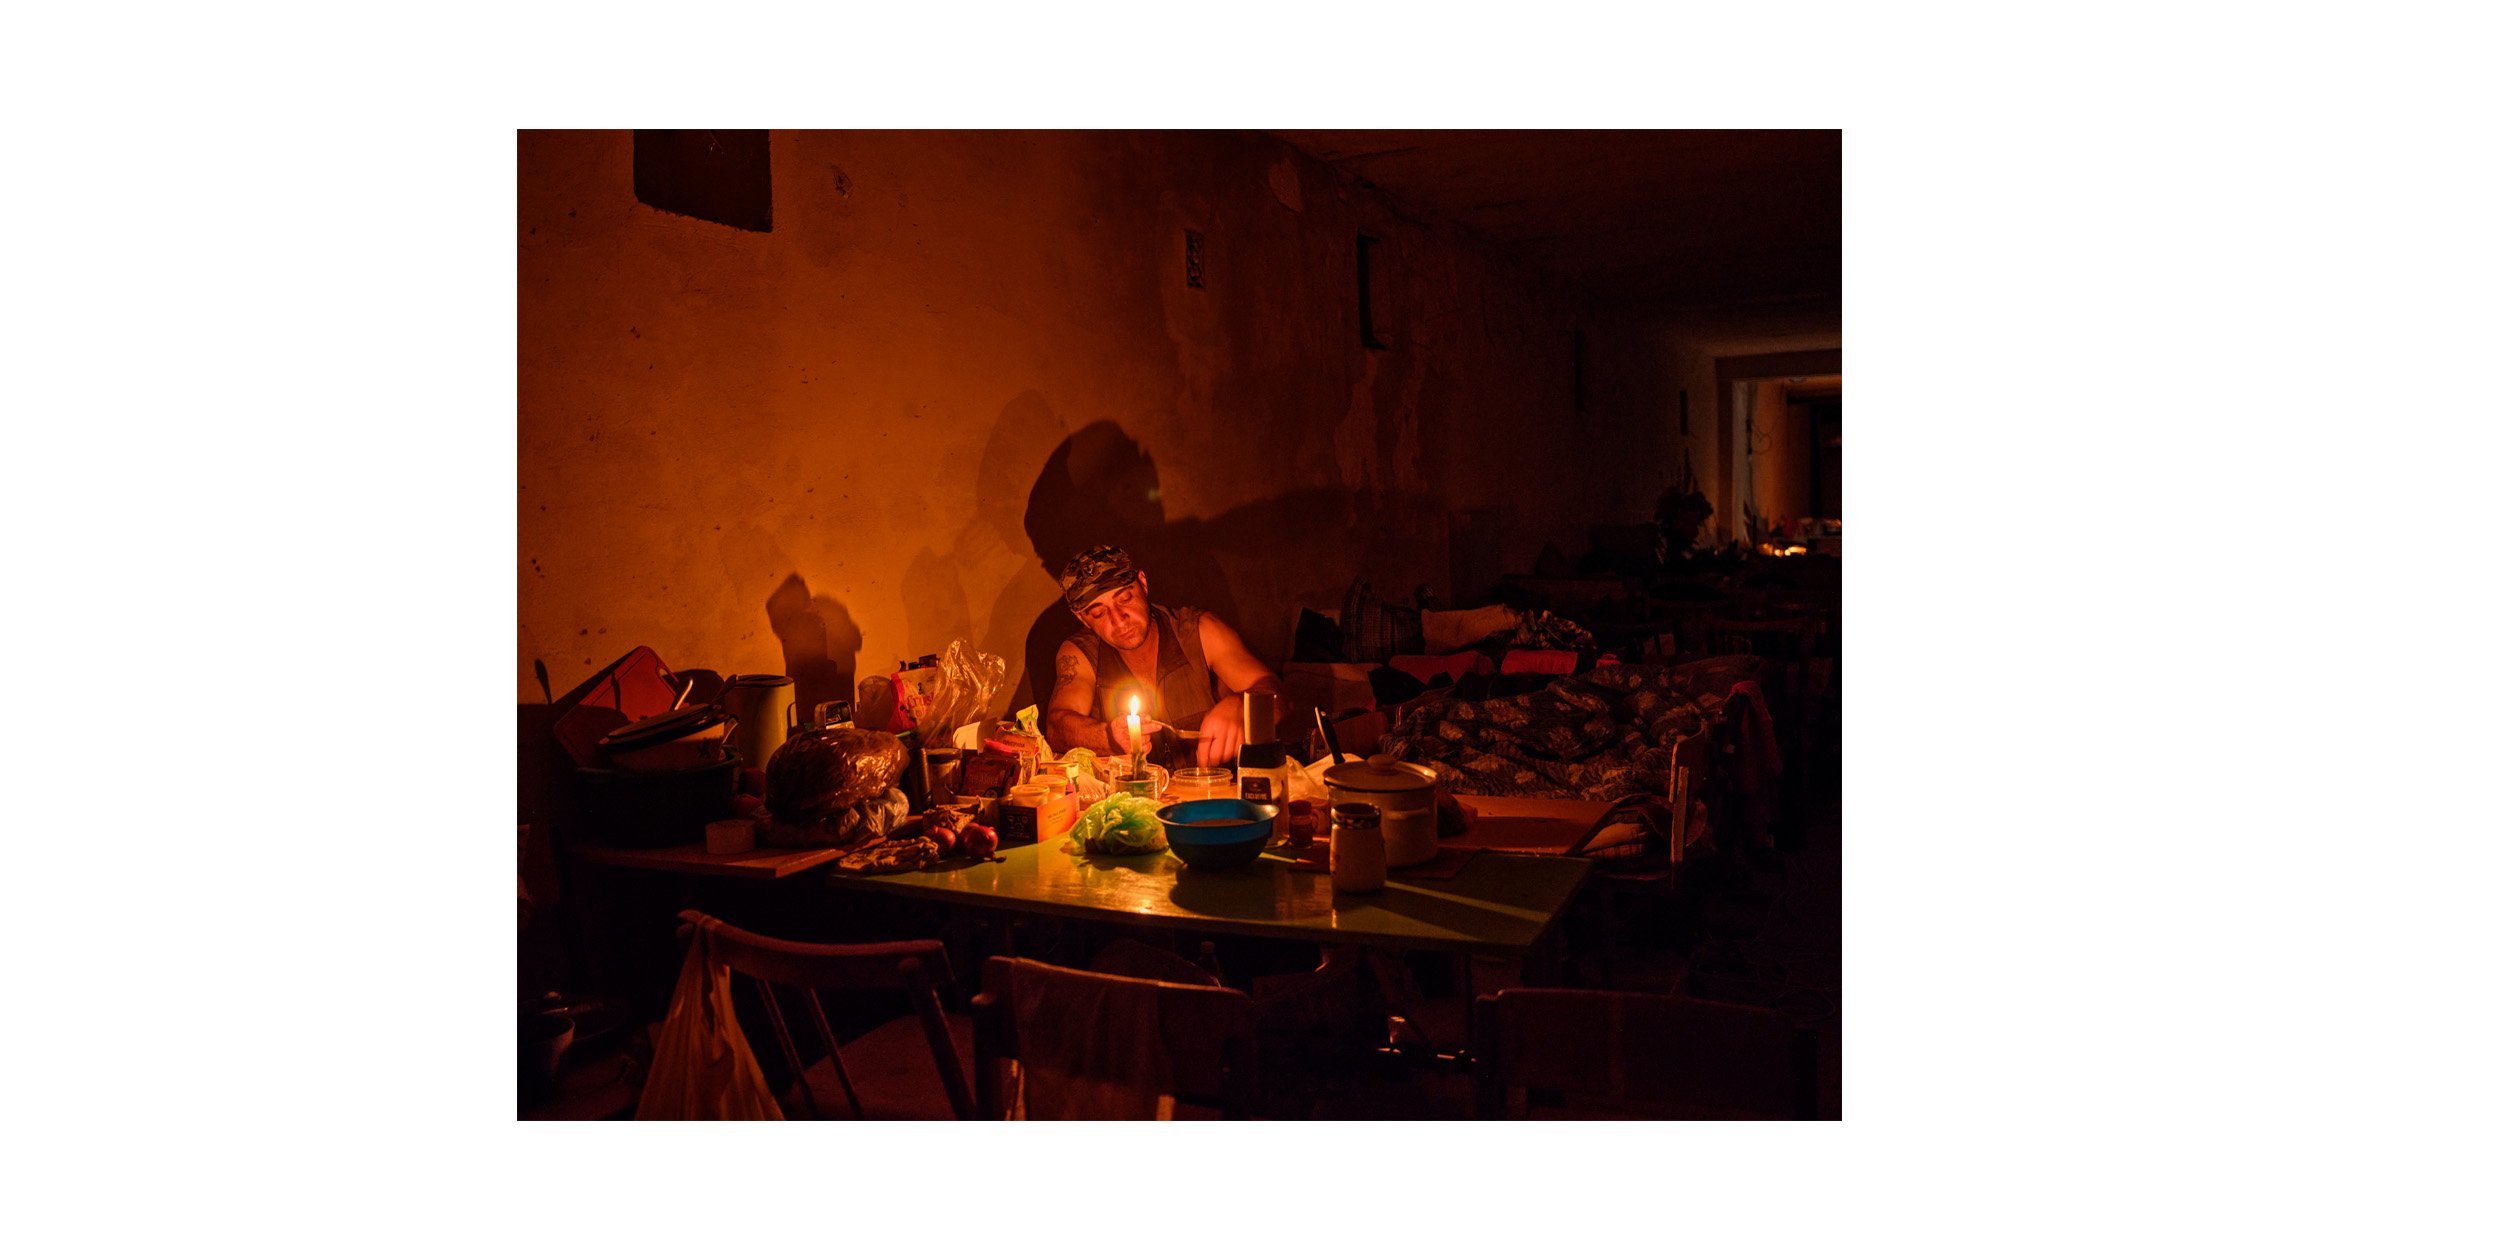  Oleg eating lunch, Velyka Novosilka, Donbas region, Ukraine 